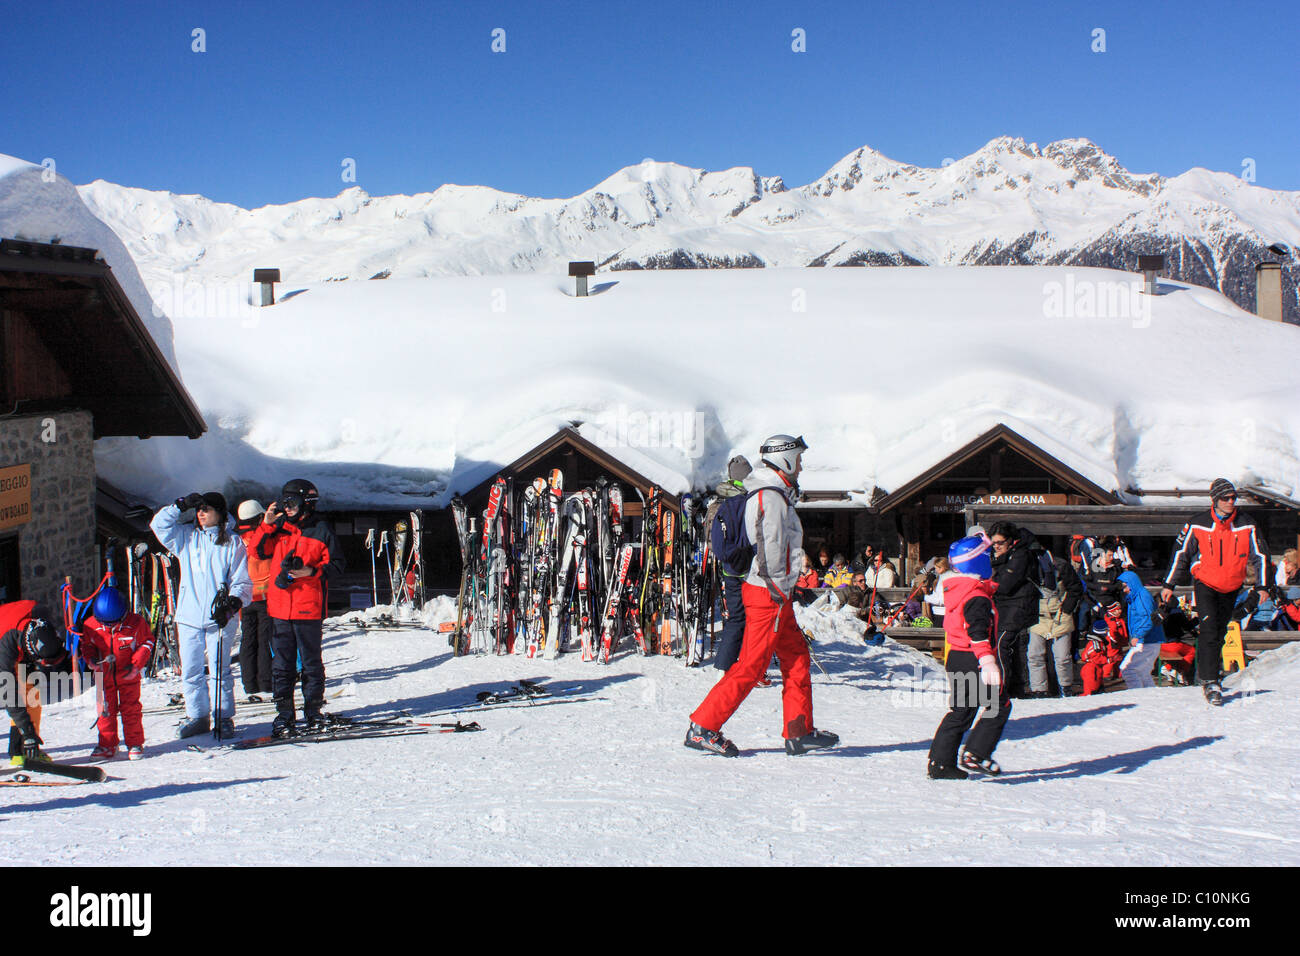 Le ski à la montagne Malga Panciana, Marilleva, Italie Banque D'Images